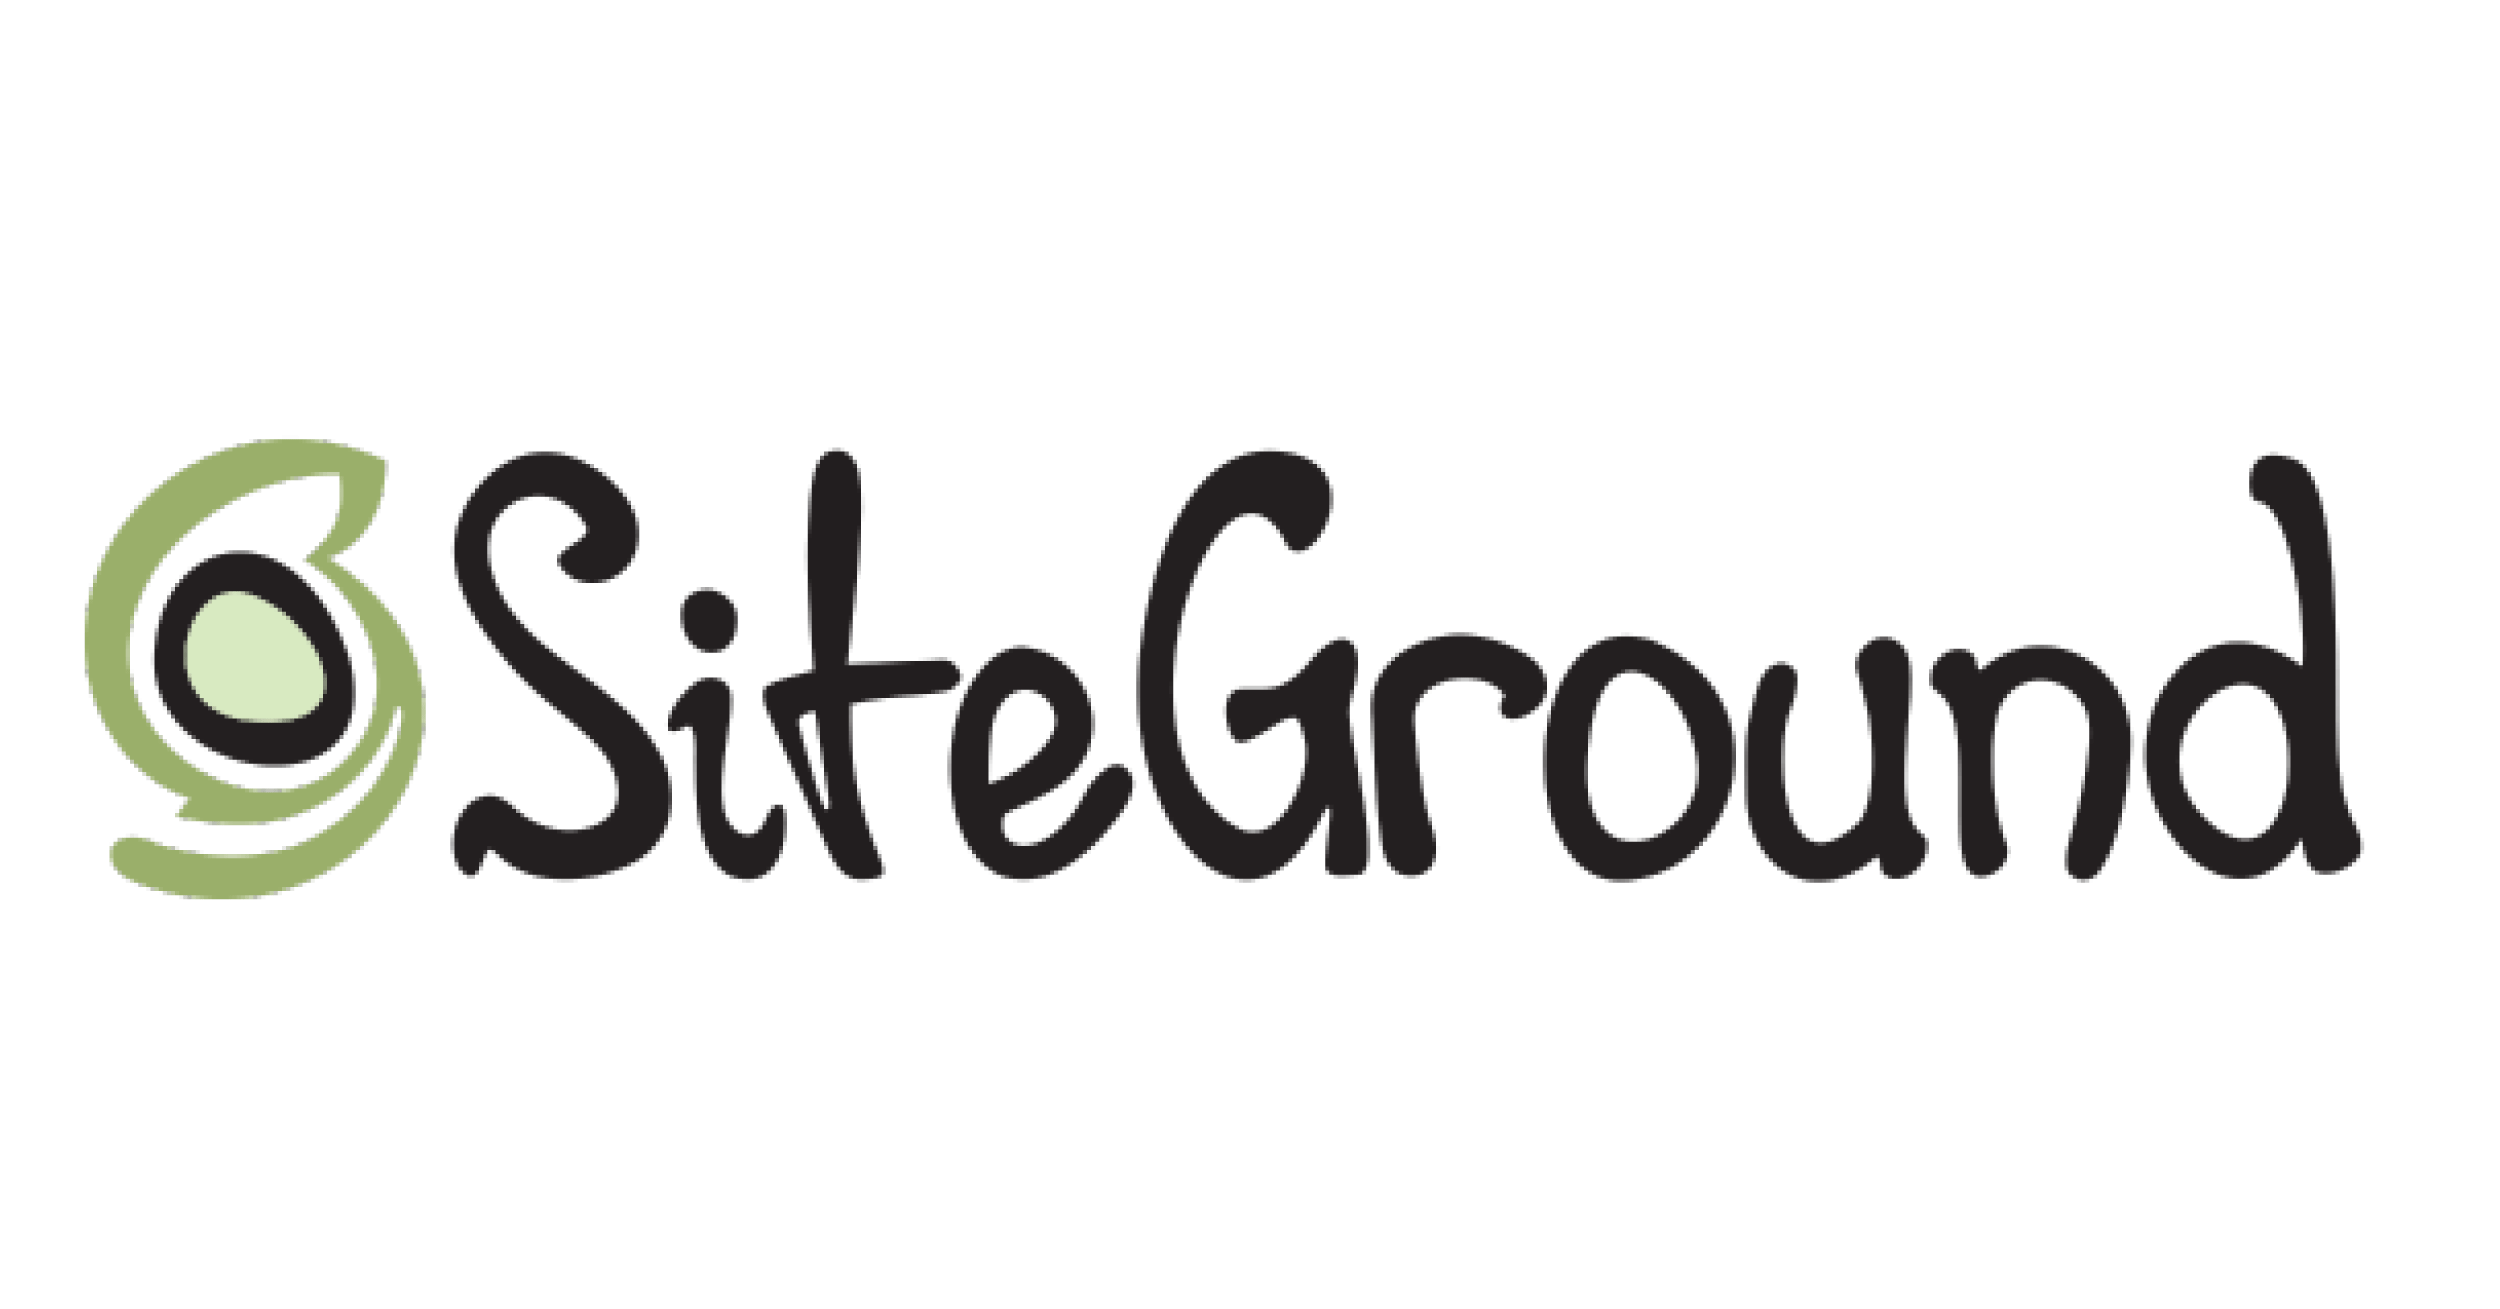 Logo Siteground